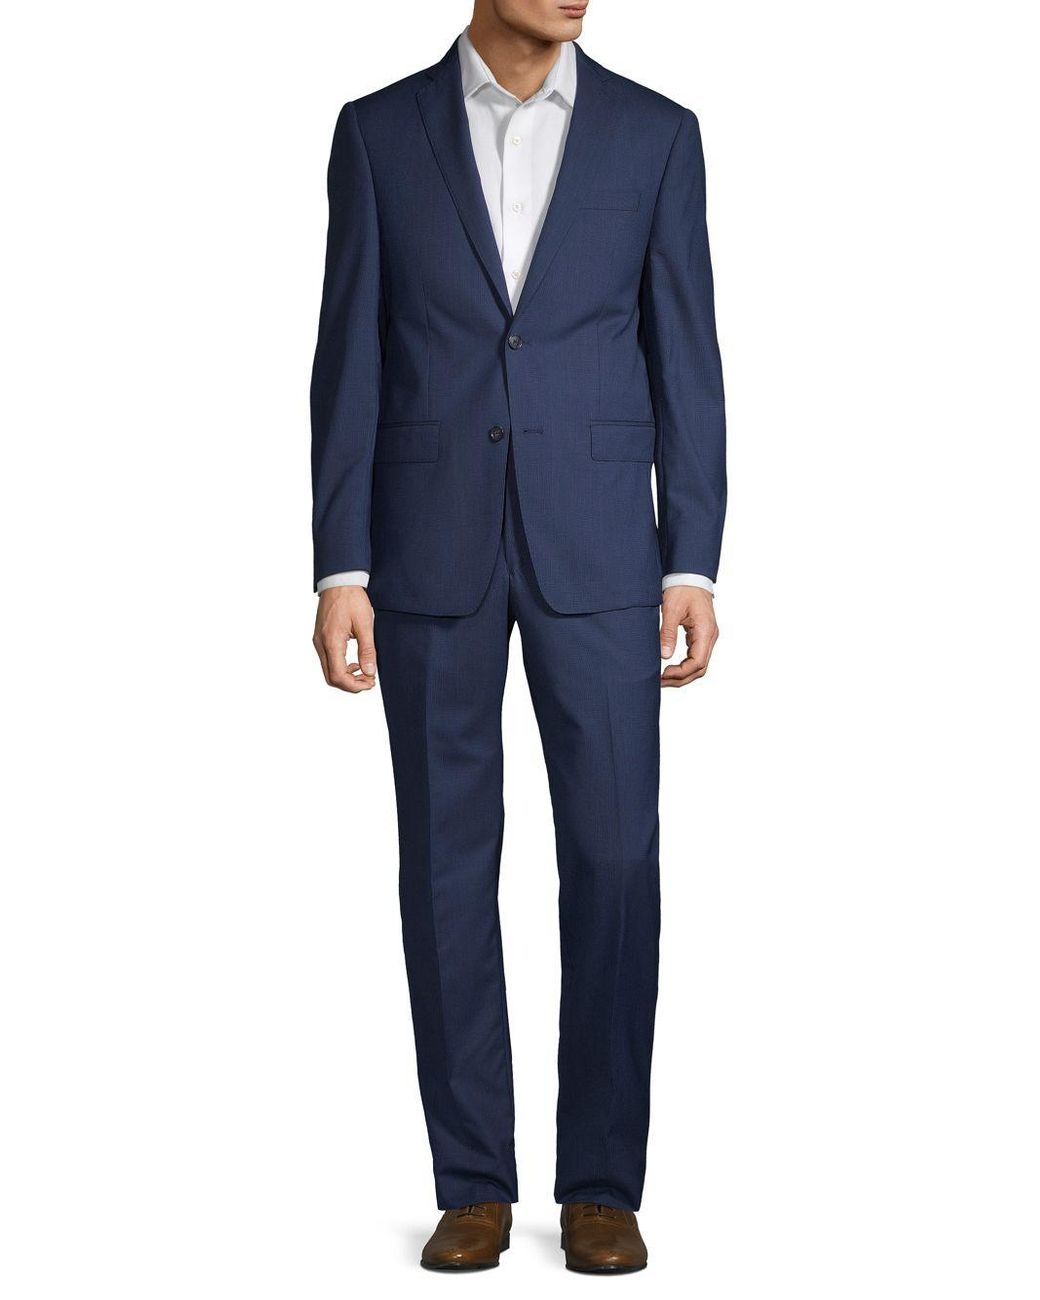 Michael Kors Classic Slim-fit Wool Suit in Blue for Men - Lyst